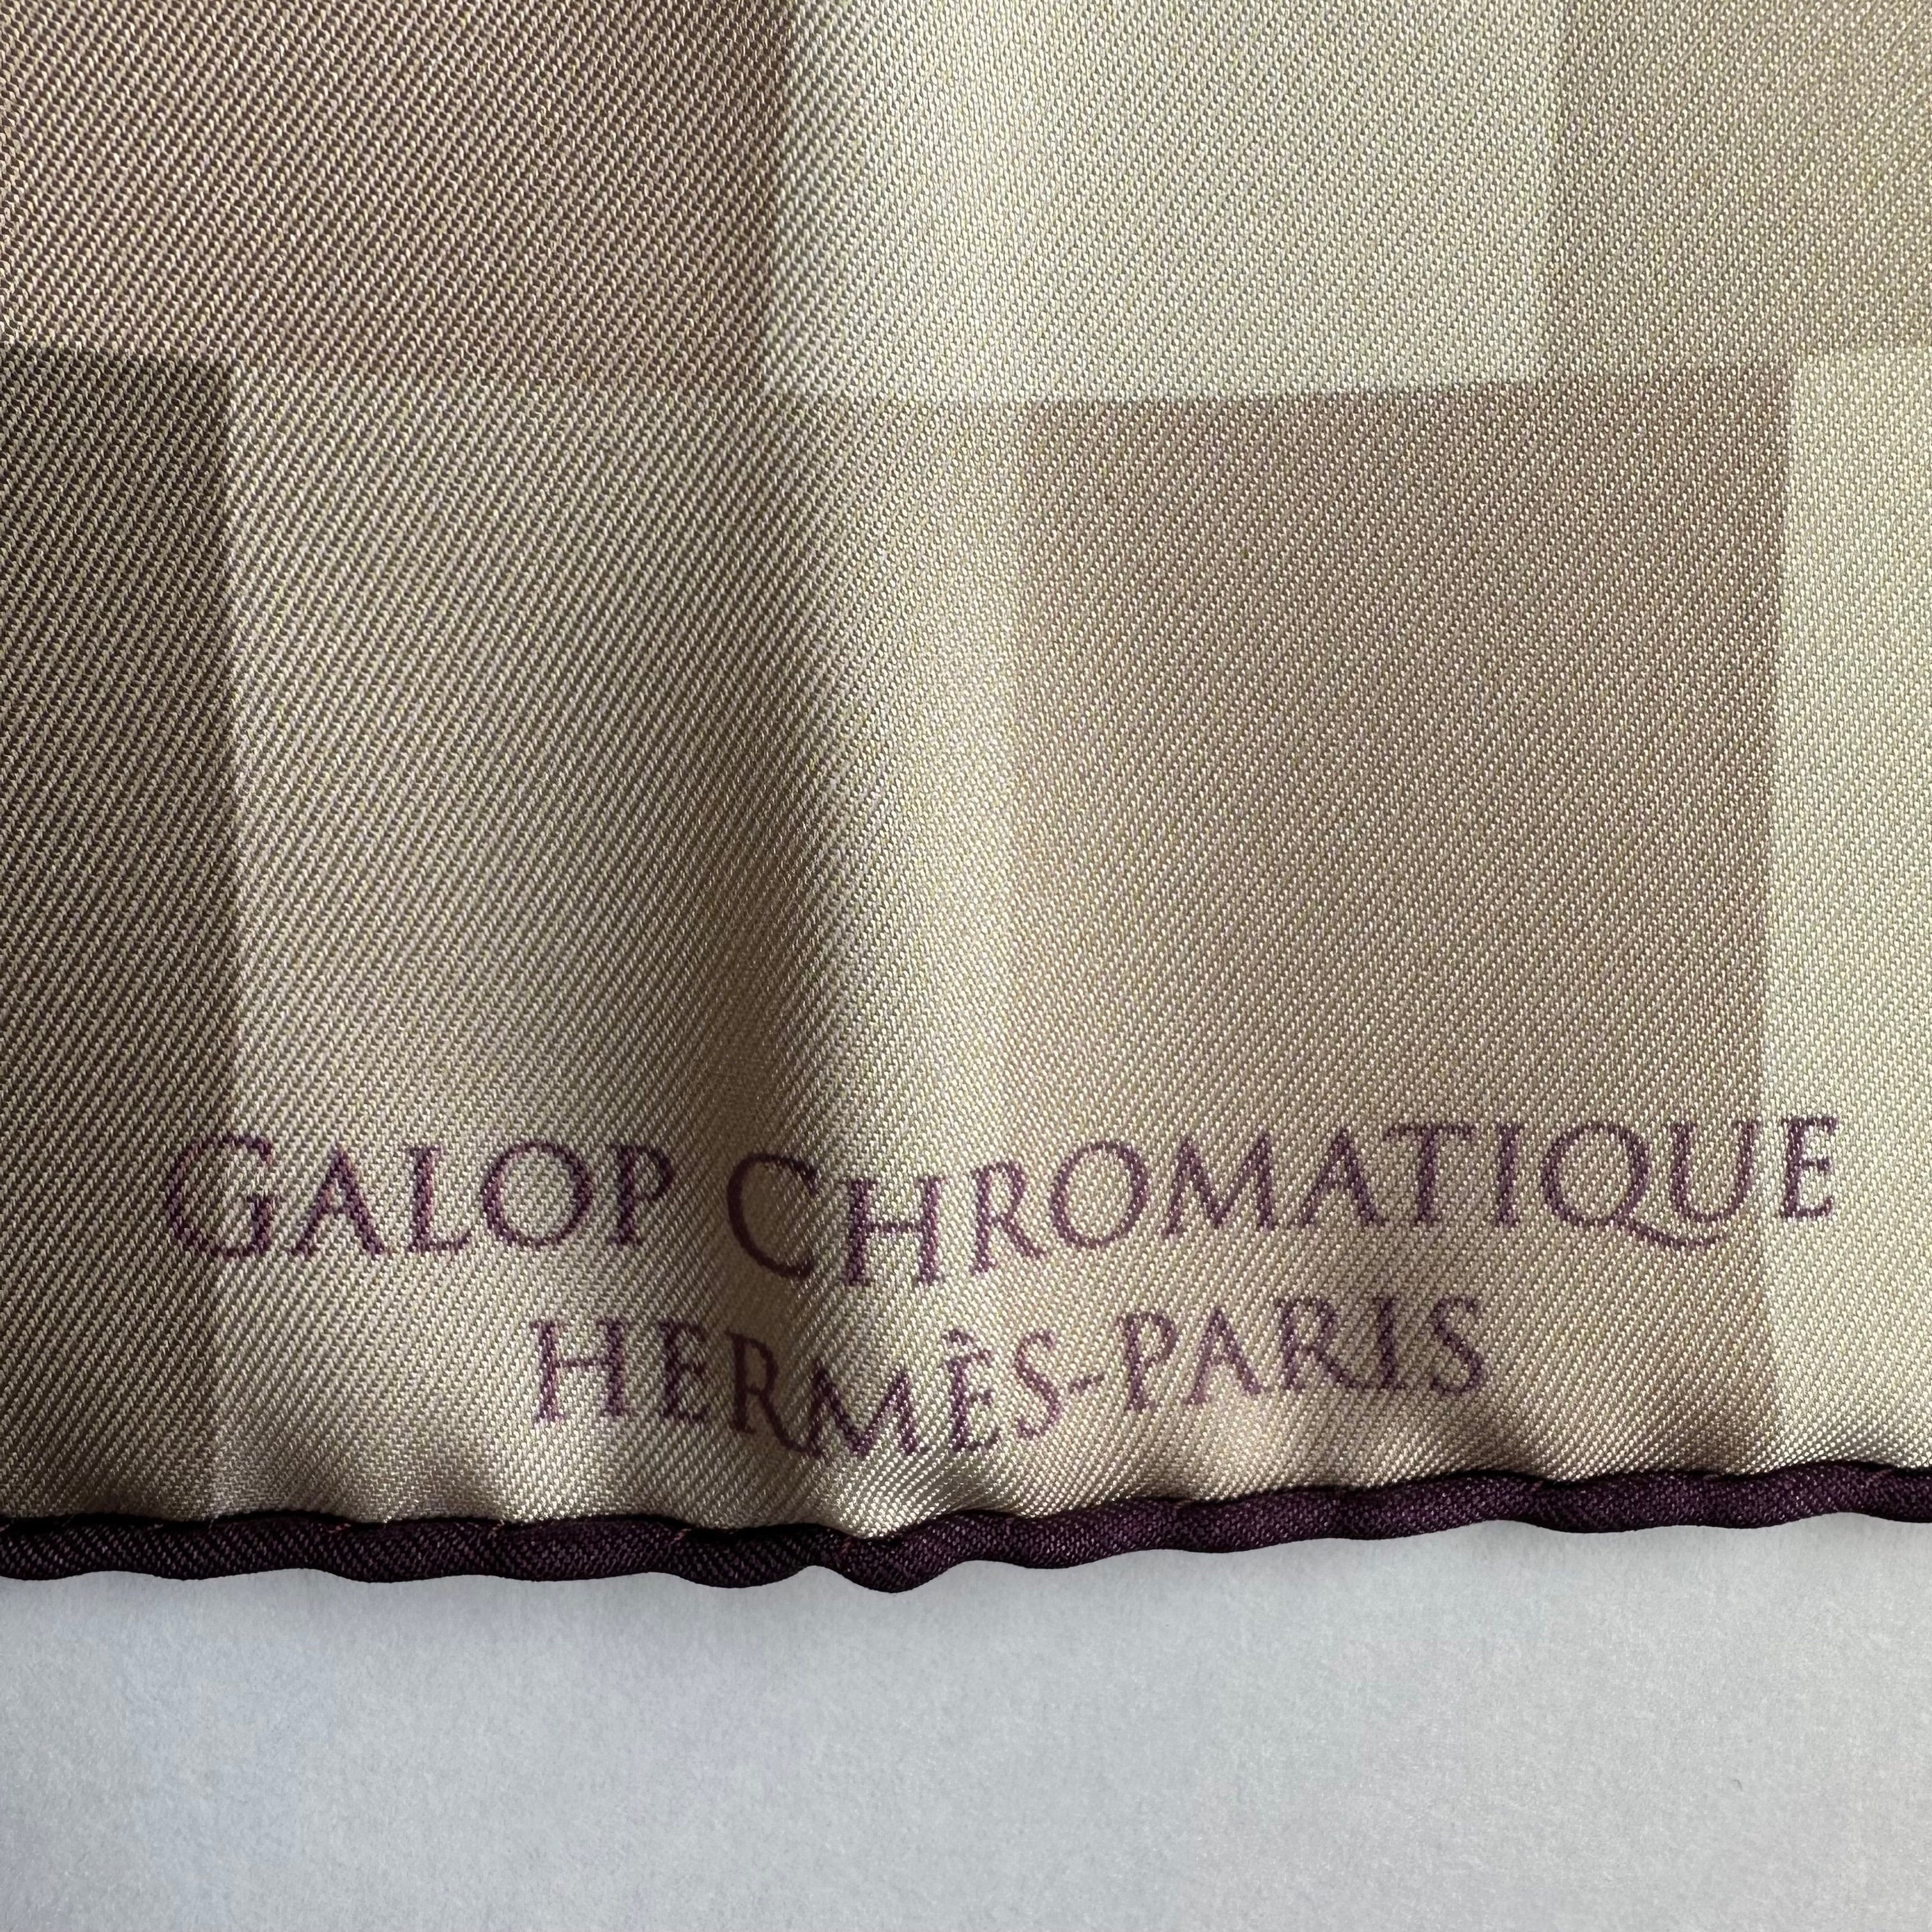 Galop chromatique - FOULARD HERMES 90 cm